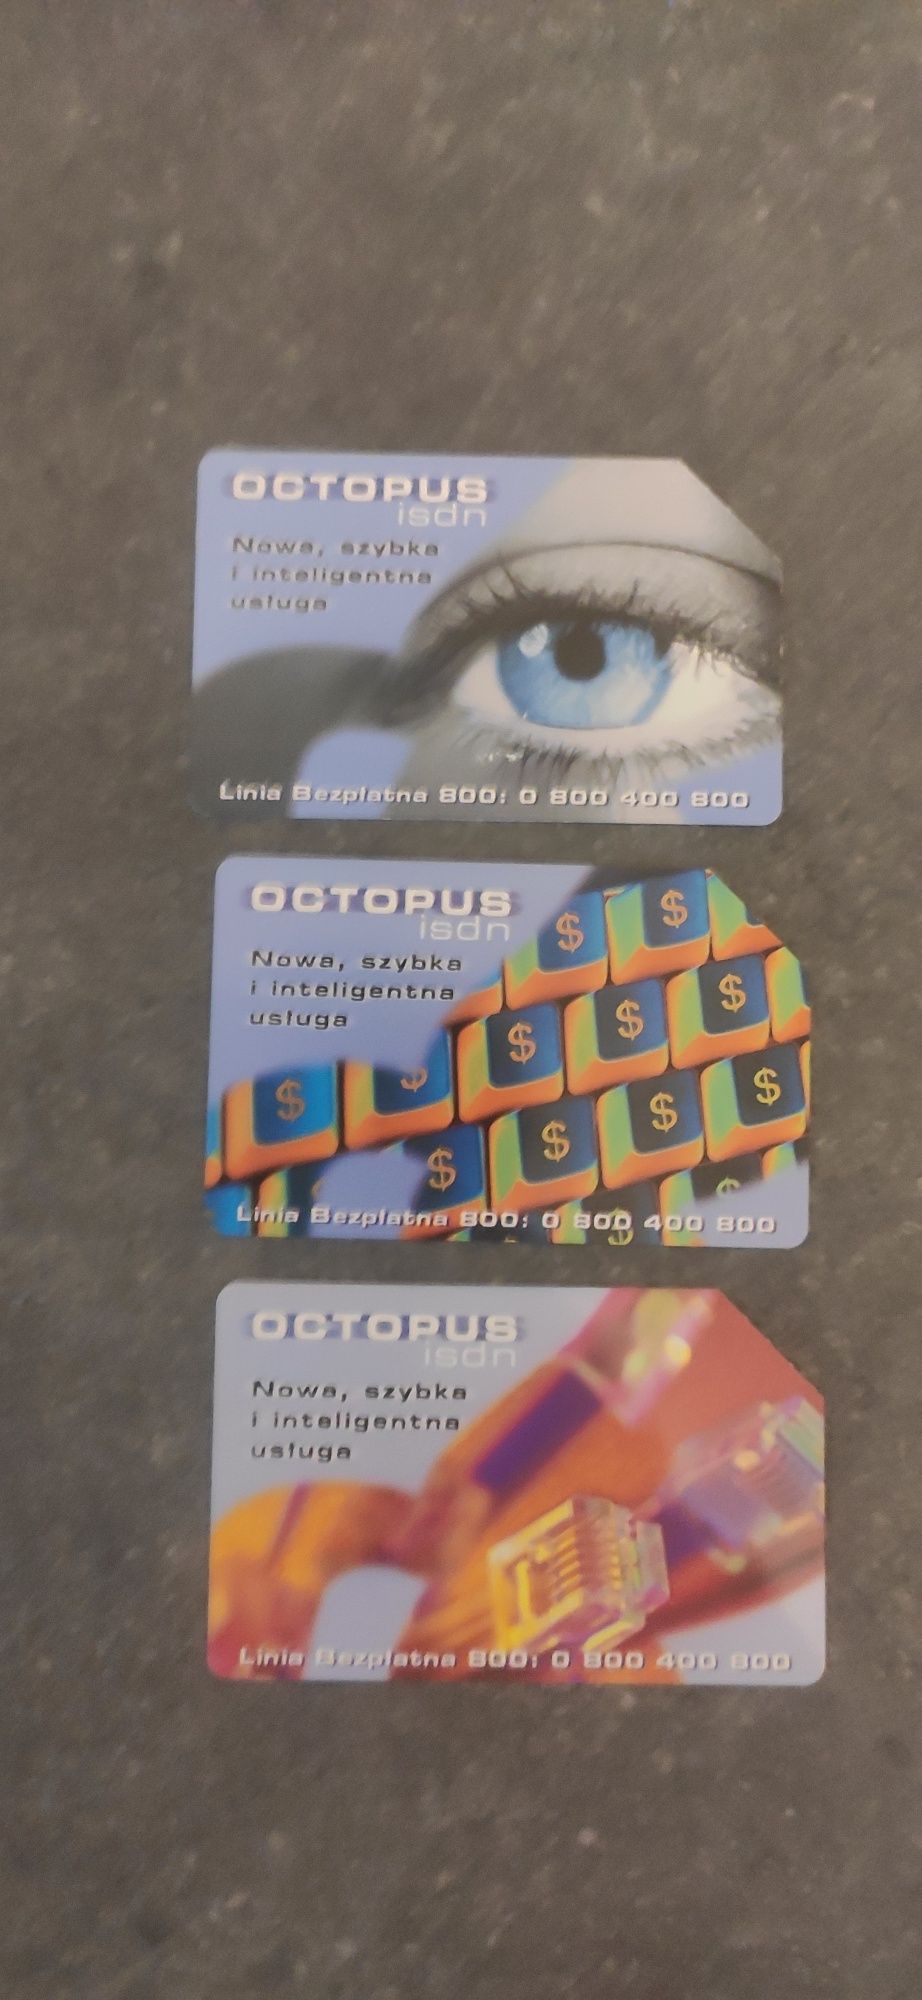 Karty telefoniczne - seria "Octopus"